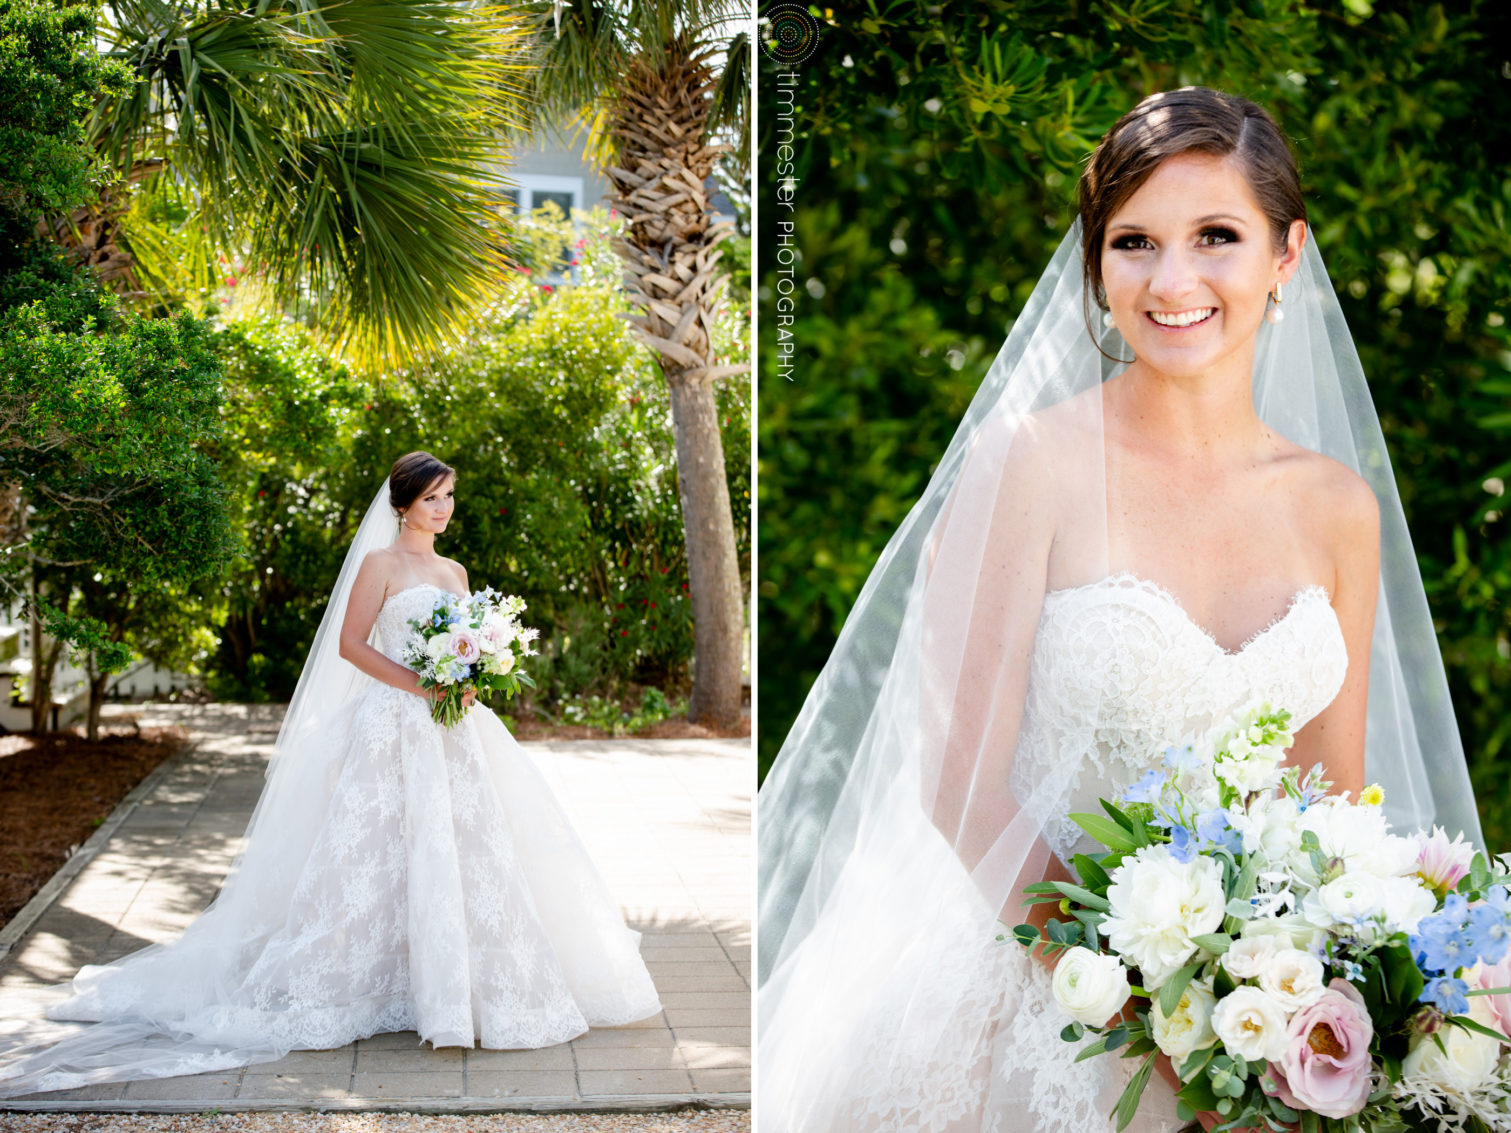 Bridal portraits and wedding at Bald Head Island, NC